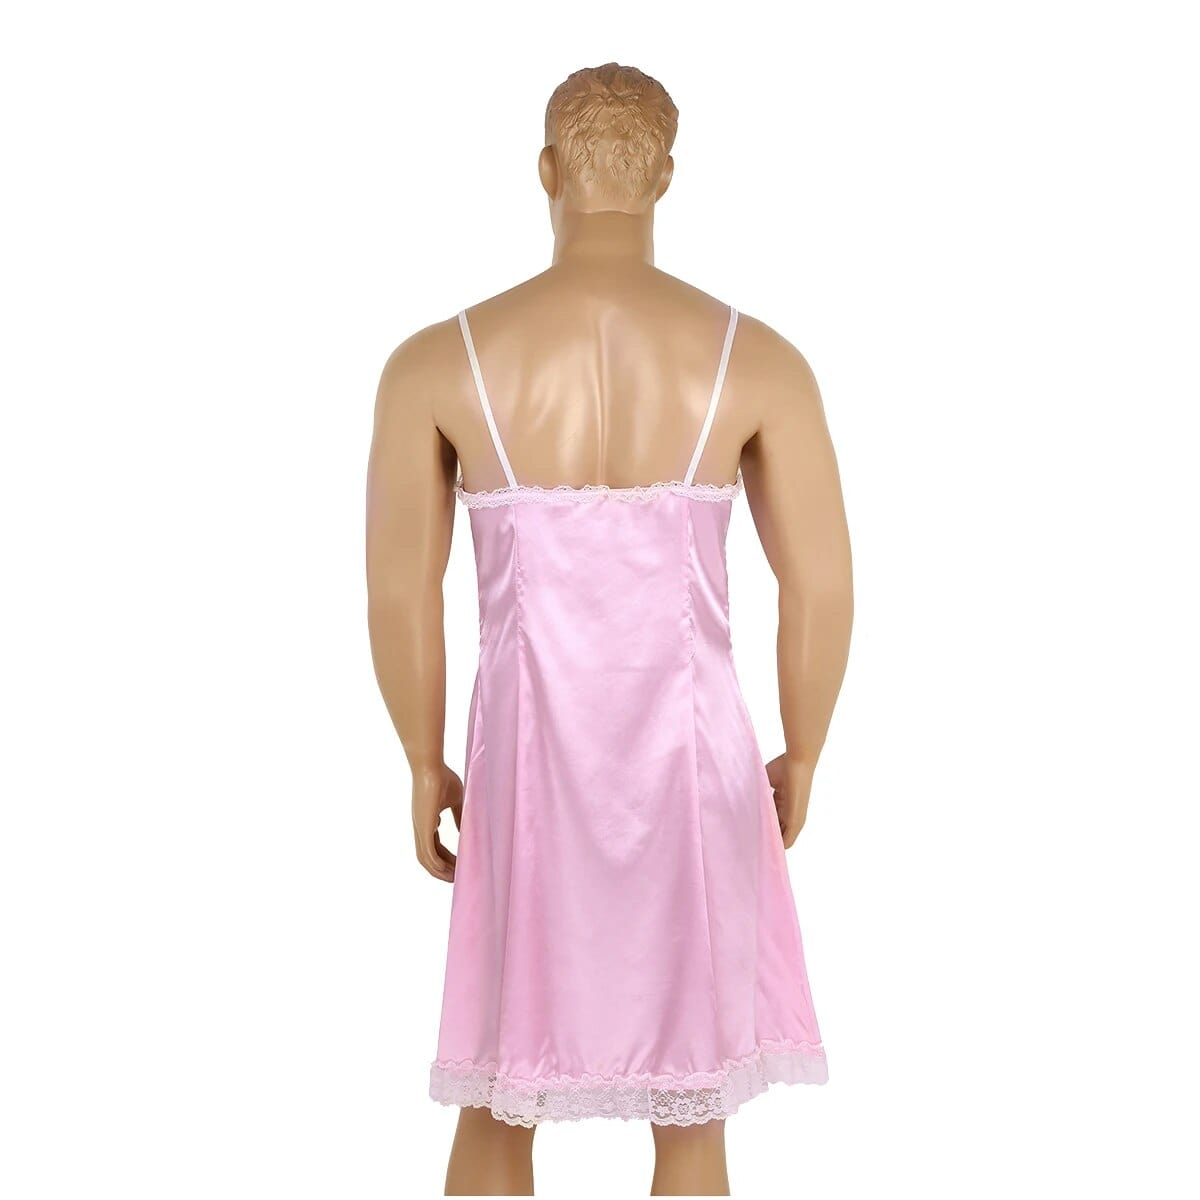 Kinky Cloth Satin Male Nightdress